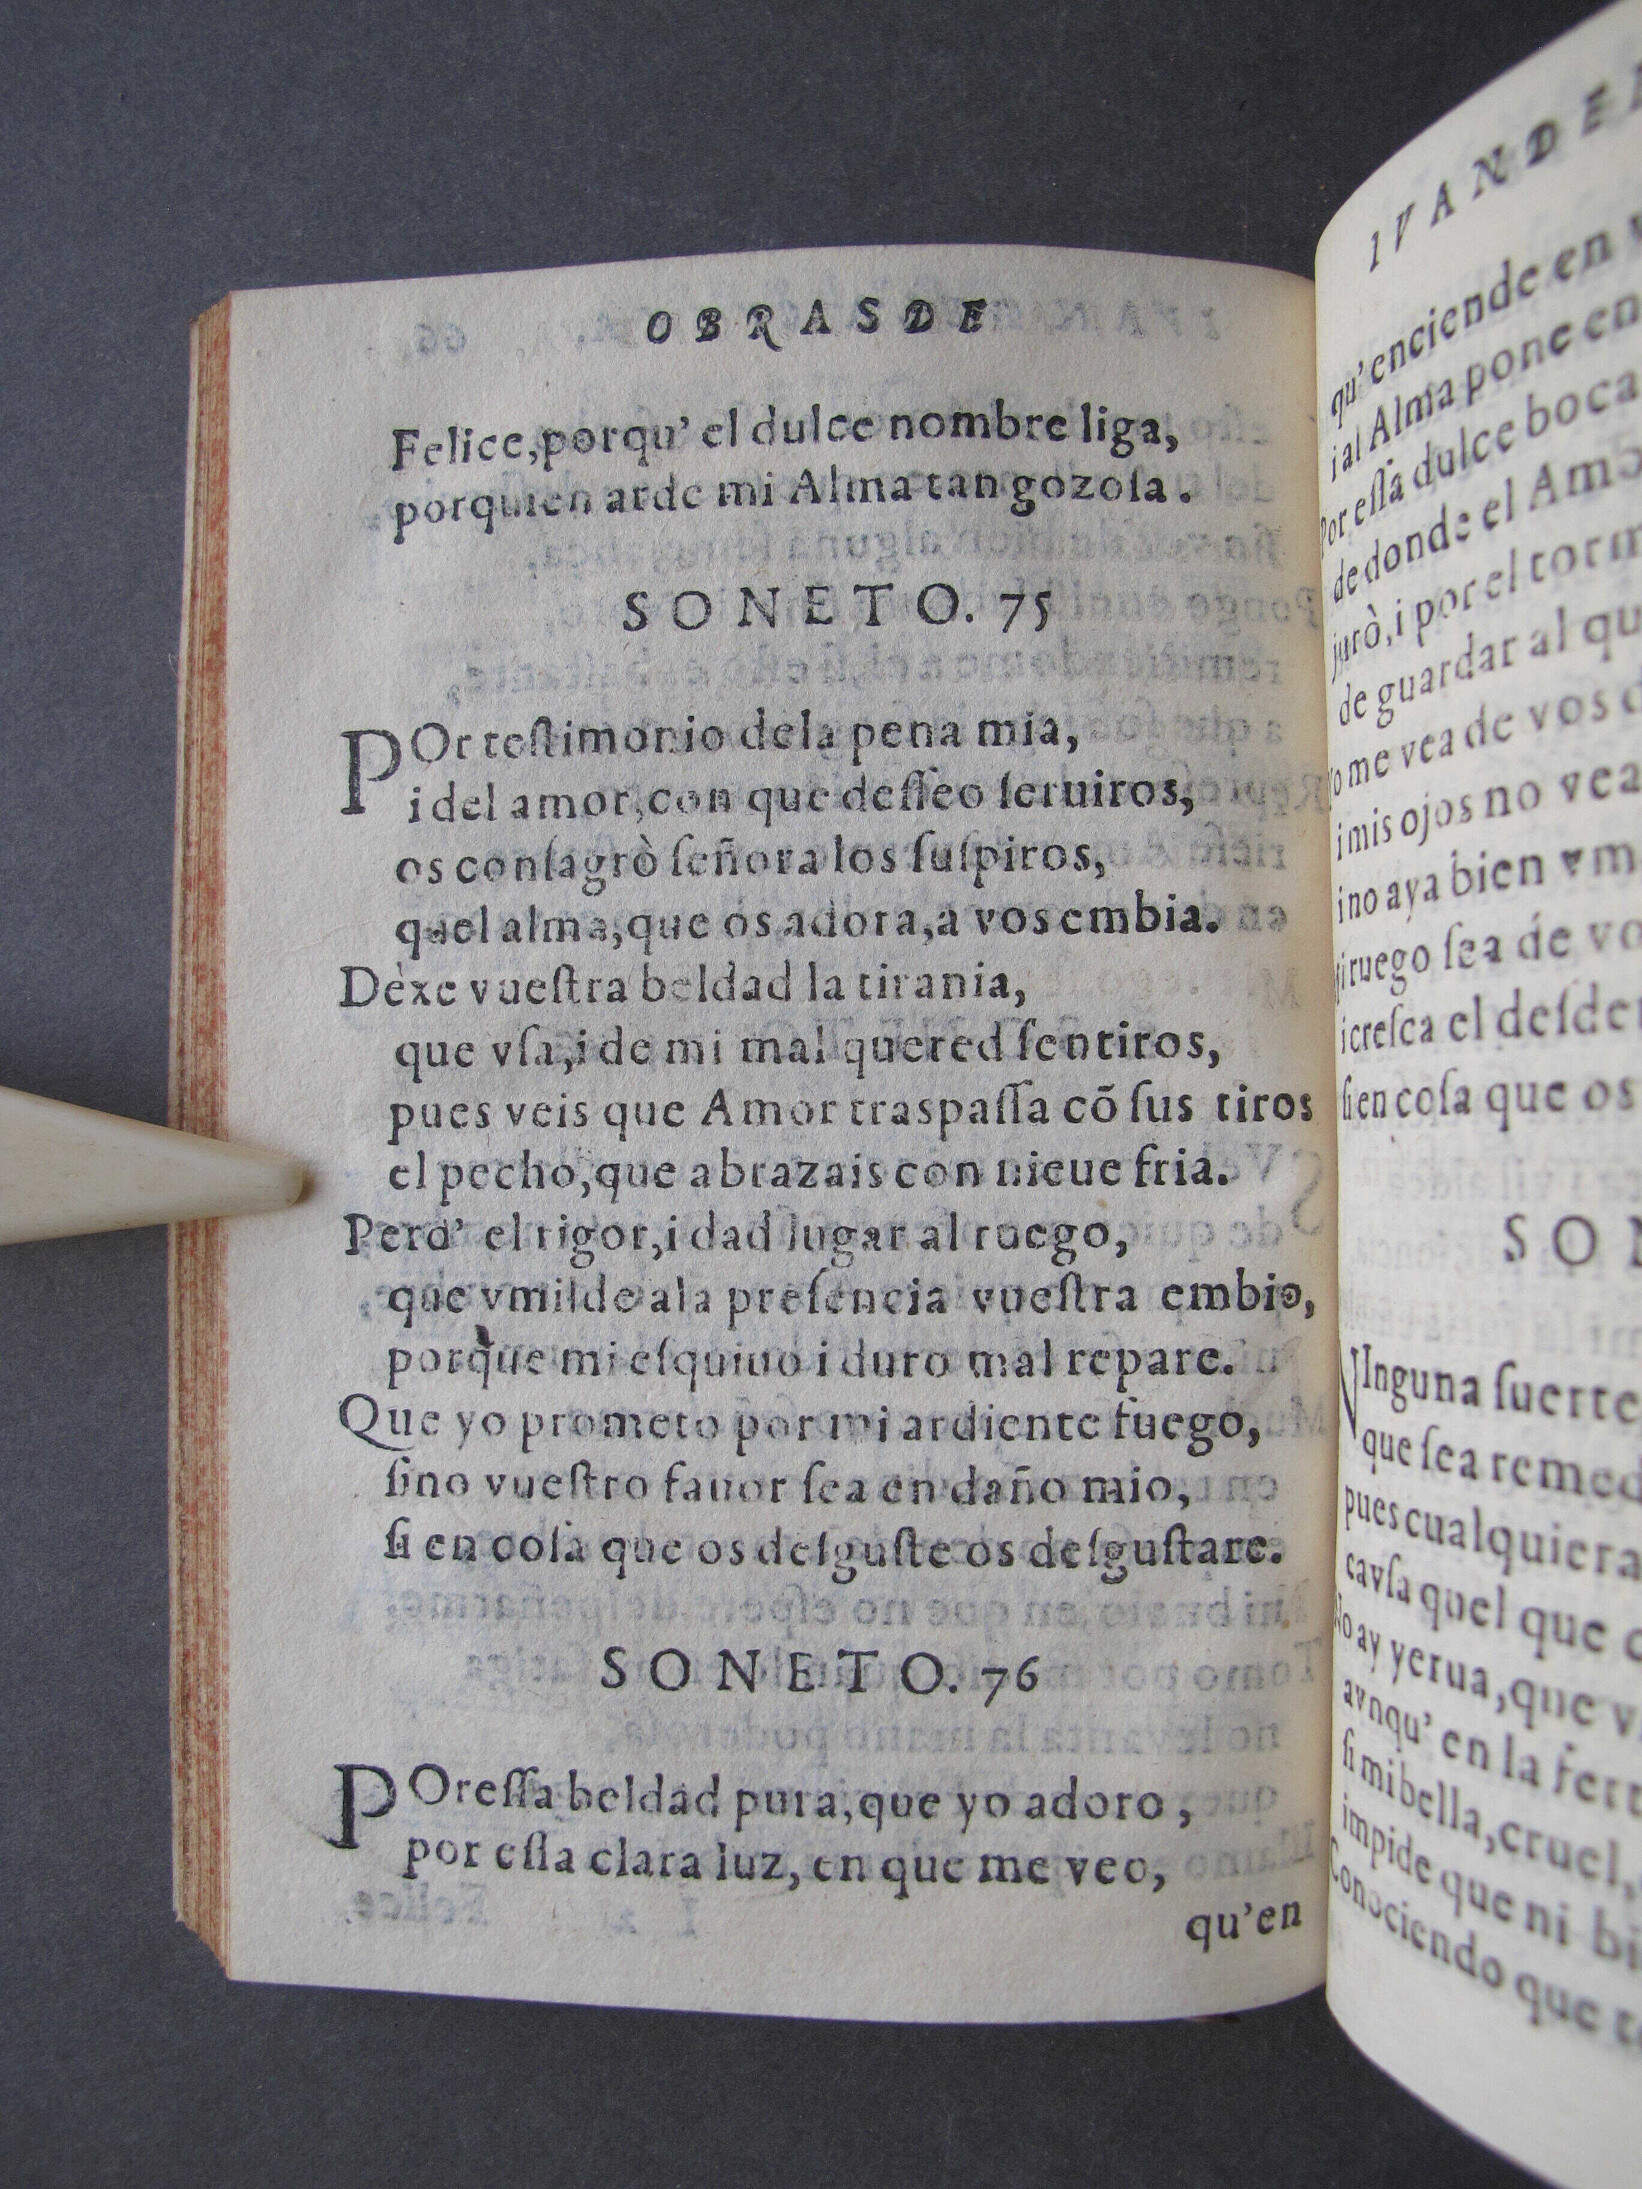 Folio I2 verso